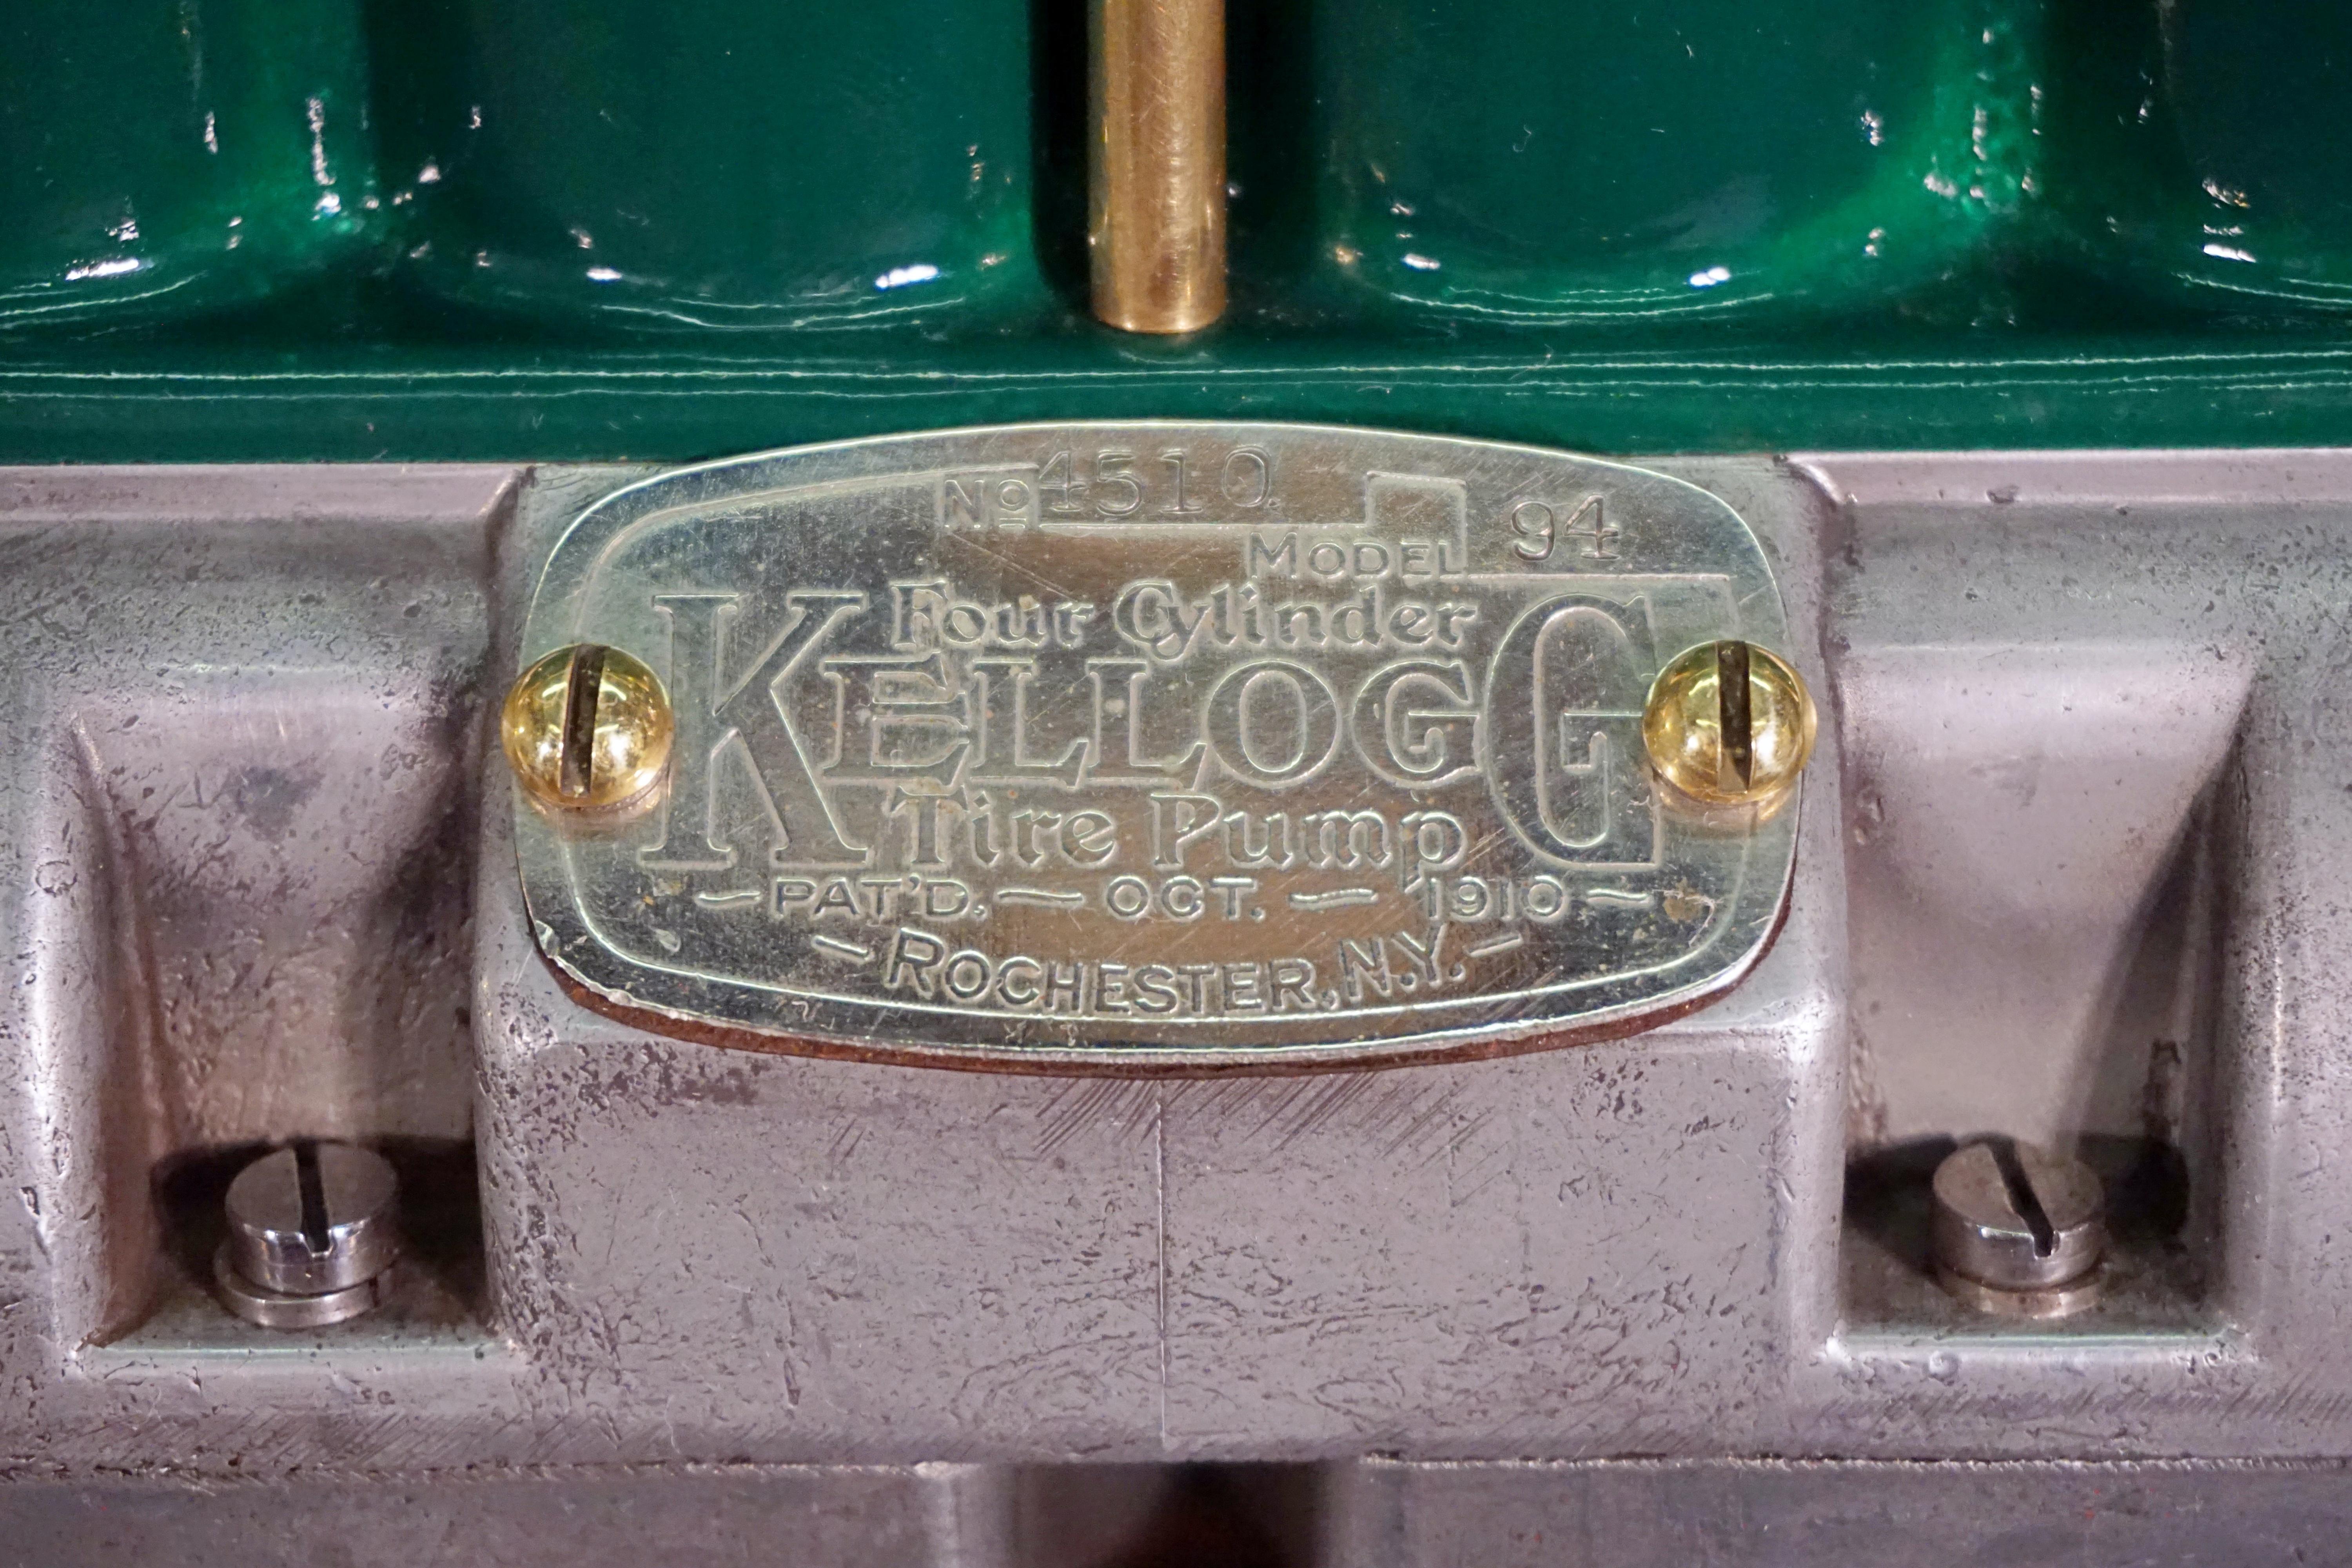 American Kelloge 1910 Tire Pump